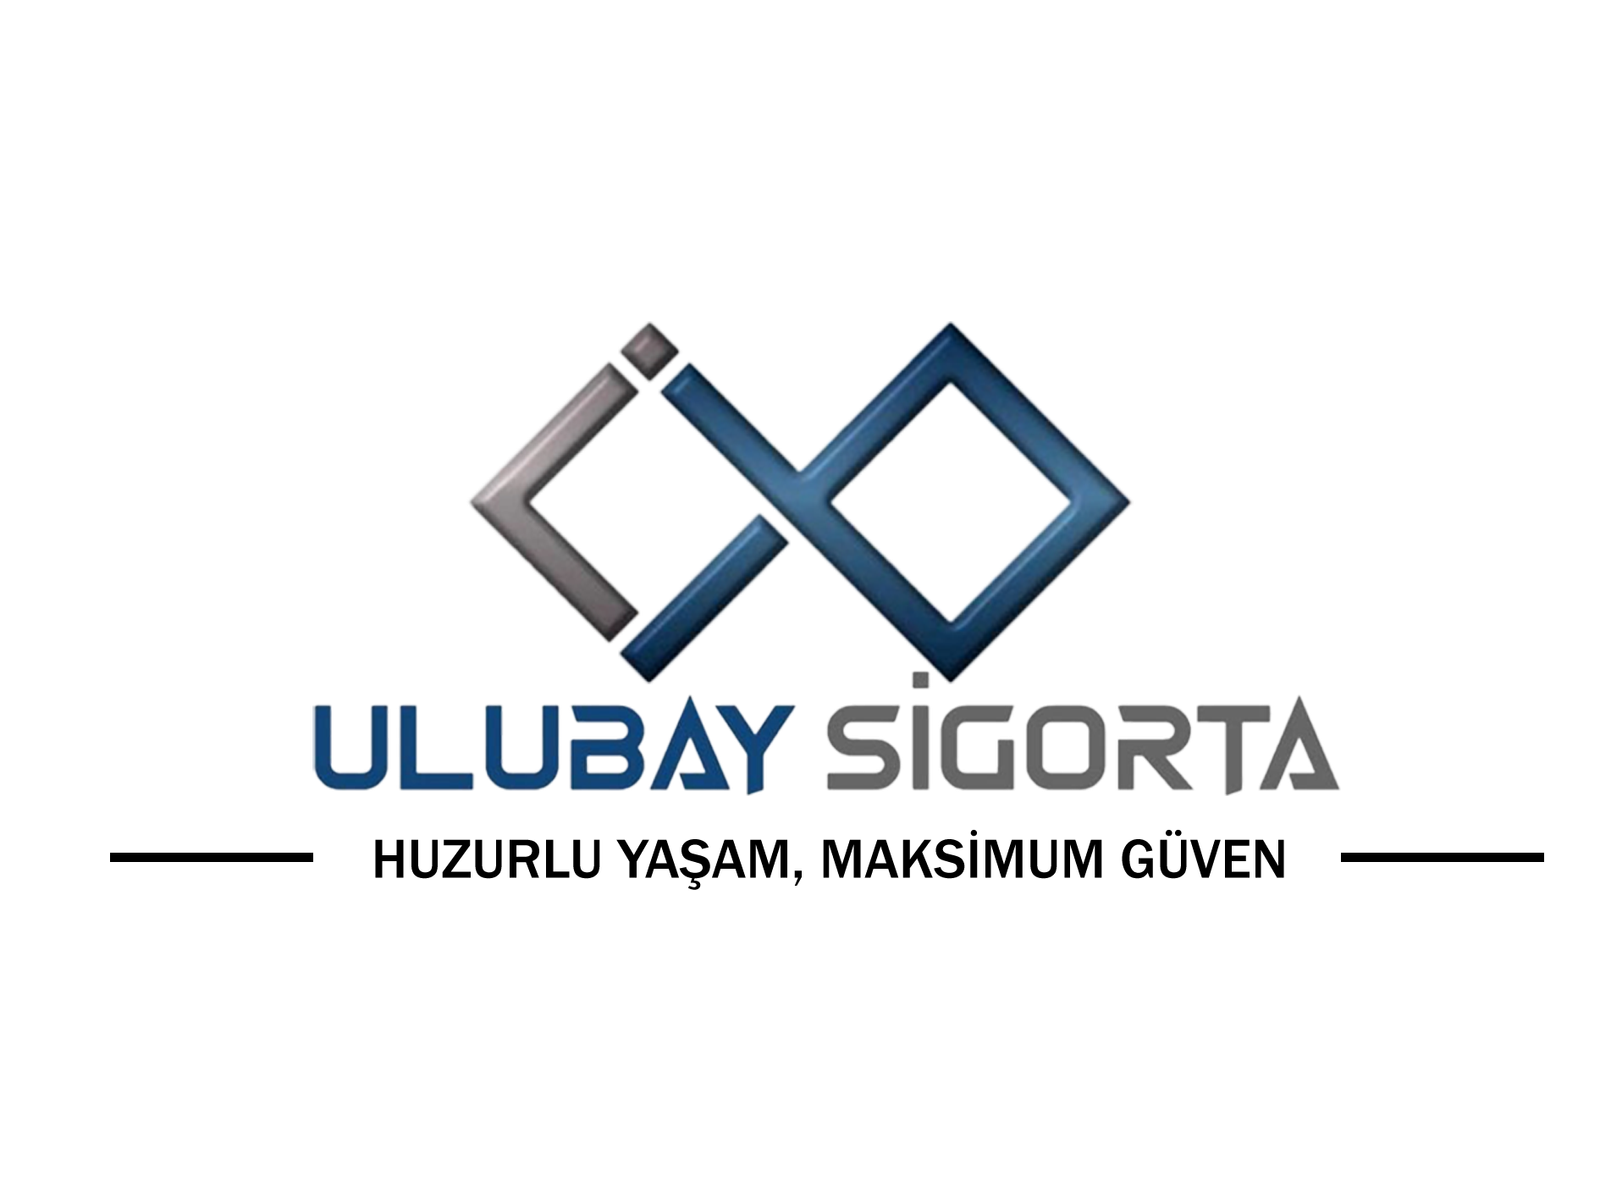 Ulubay Sigorta